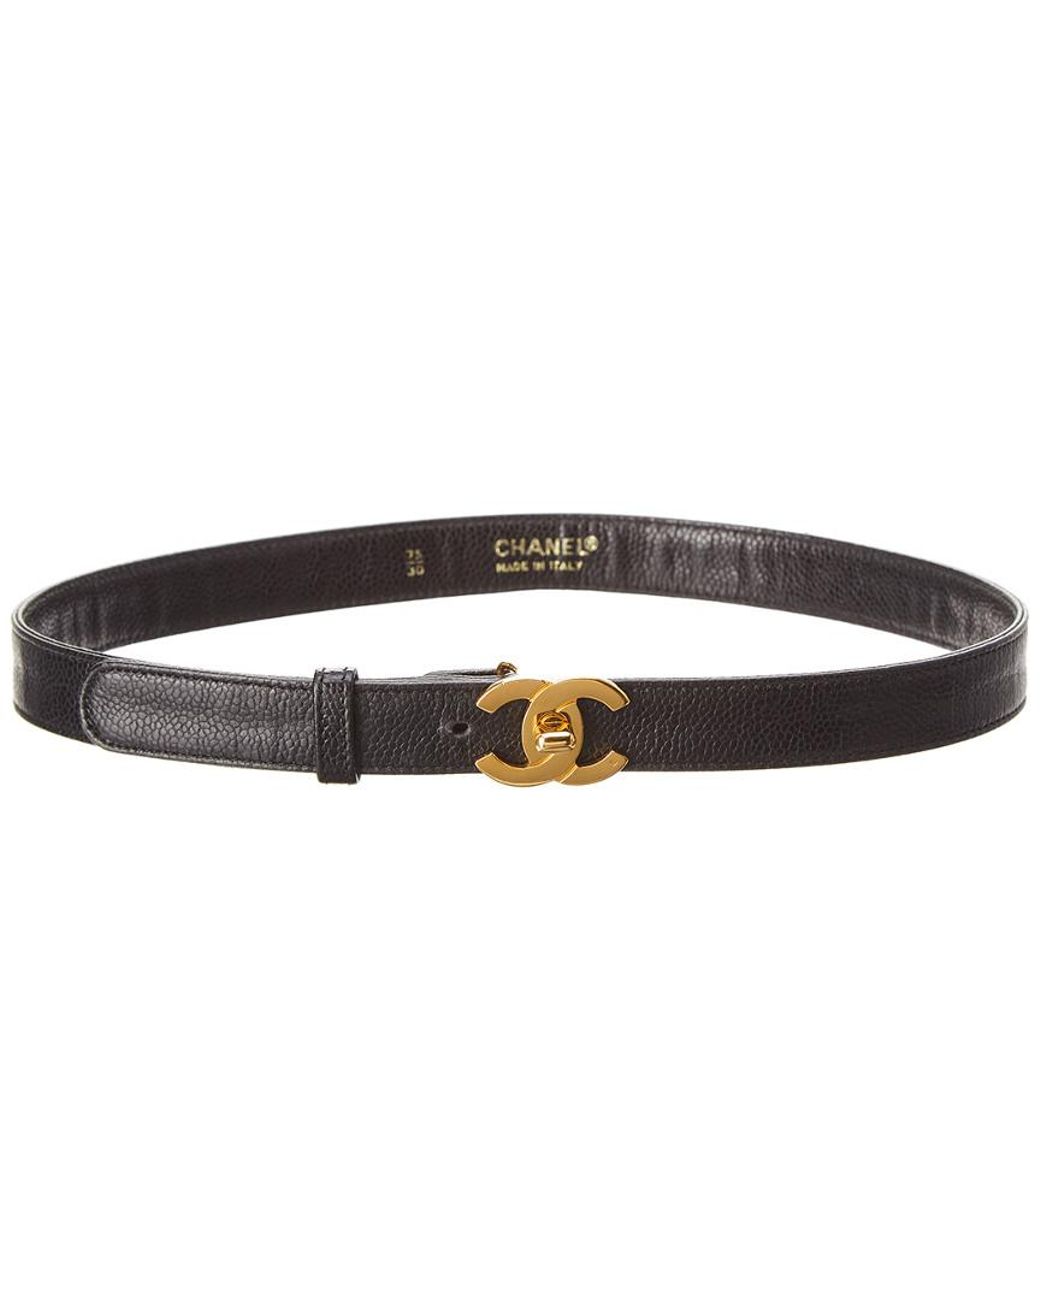 Chanel Black Leather Cc Turnlock Belt, Size 75 | Lyst